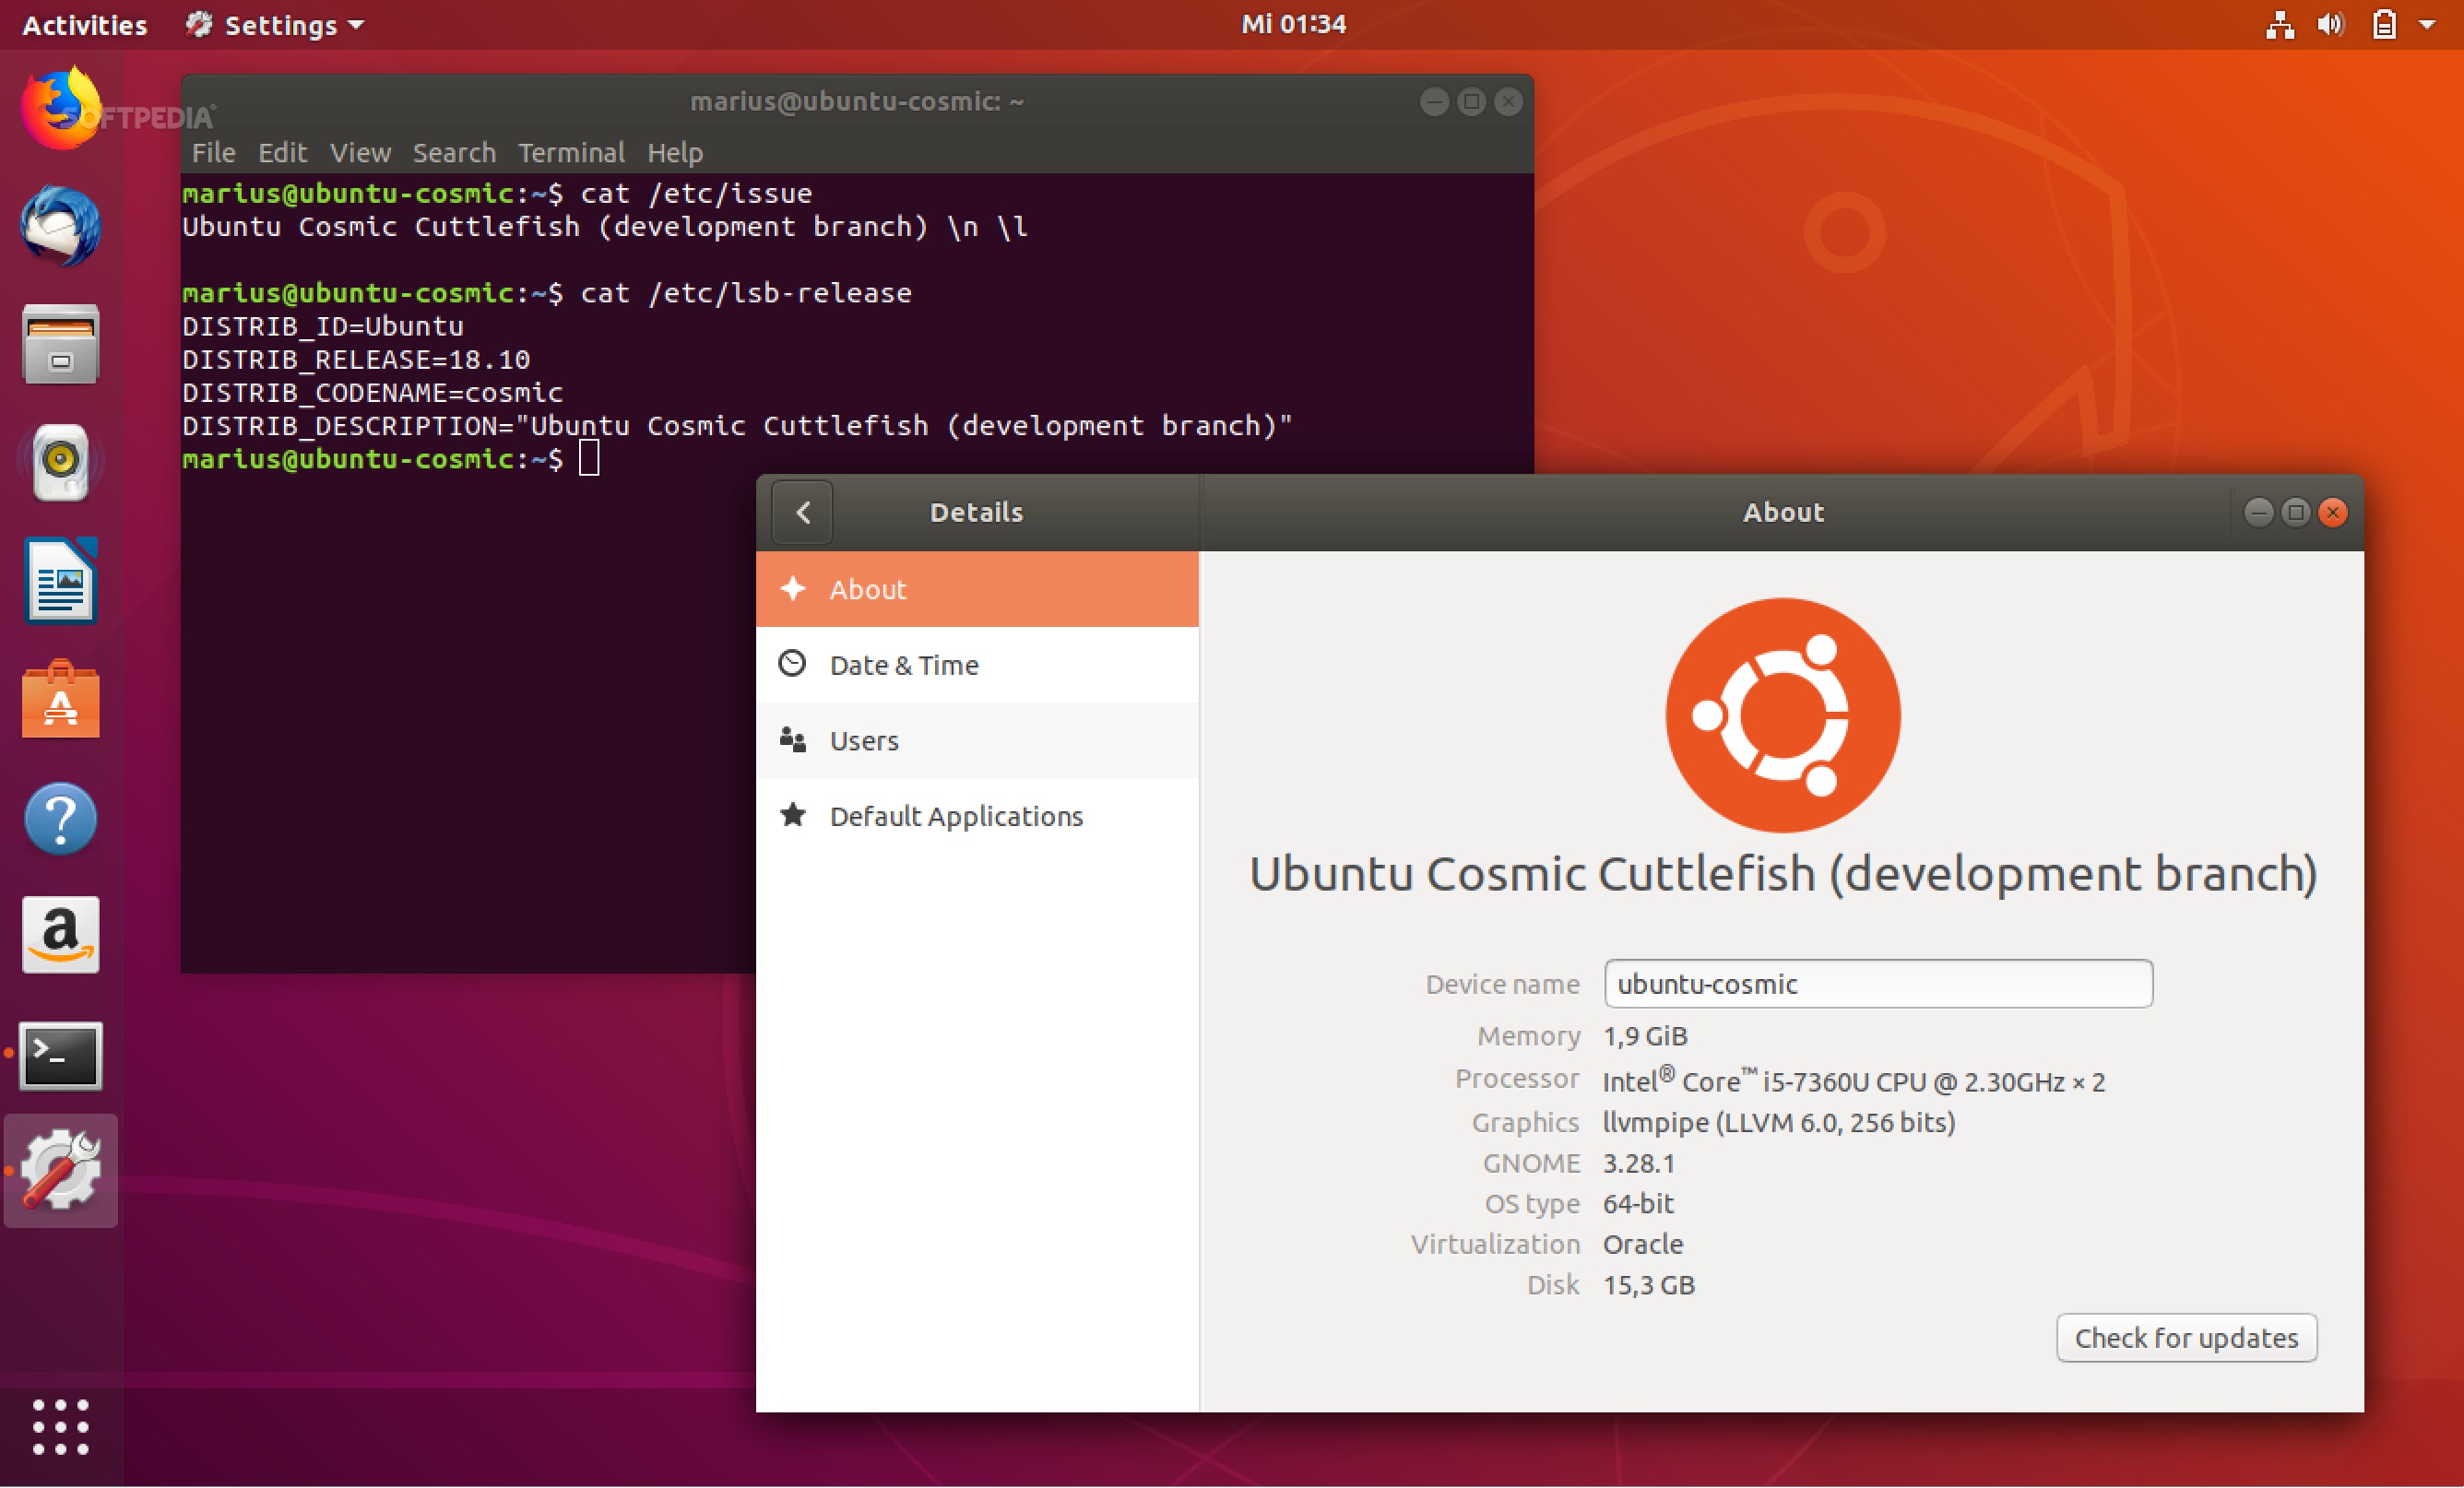 ubuntu-18-10-cosmic-cuttlefish-is-now-officially-open-for-development-521044-2.jpg